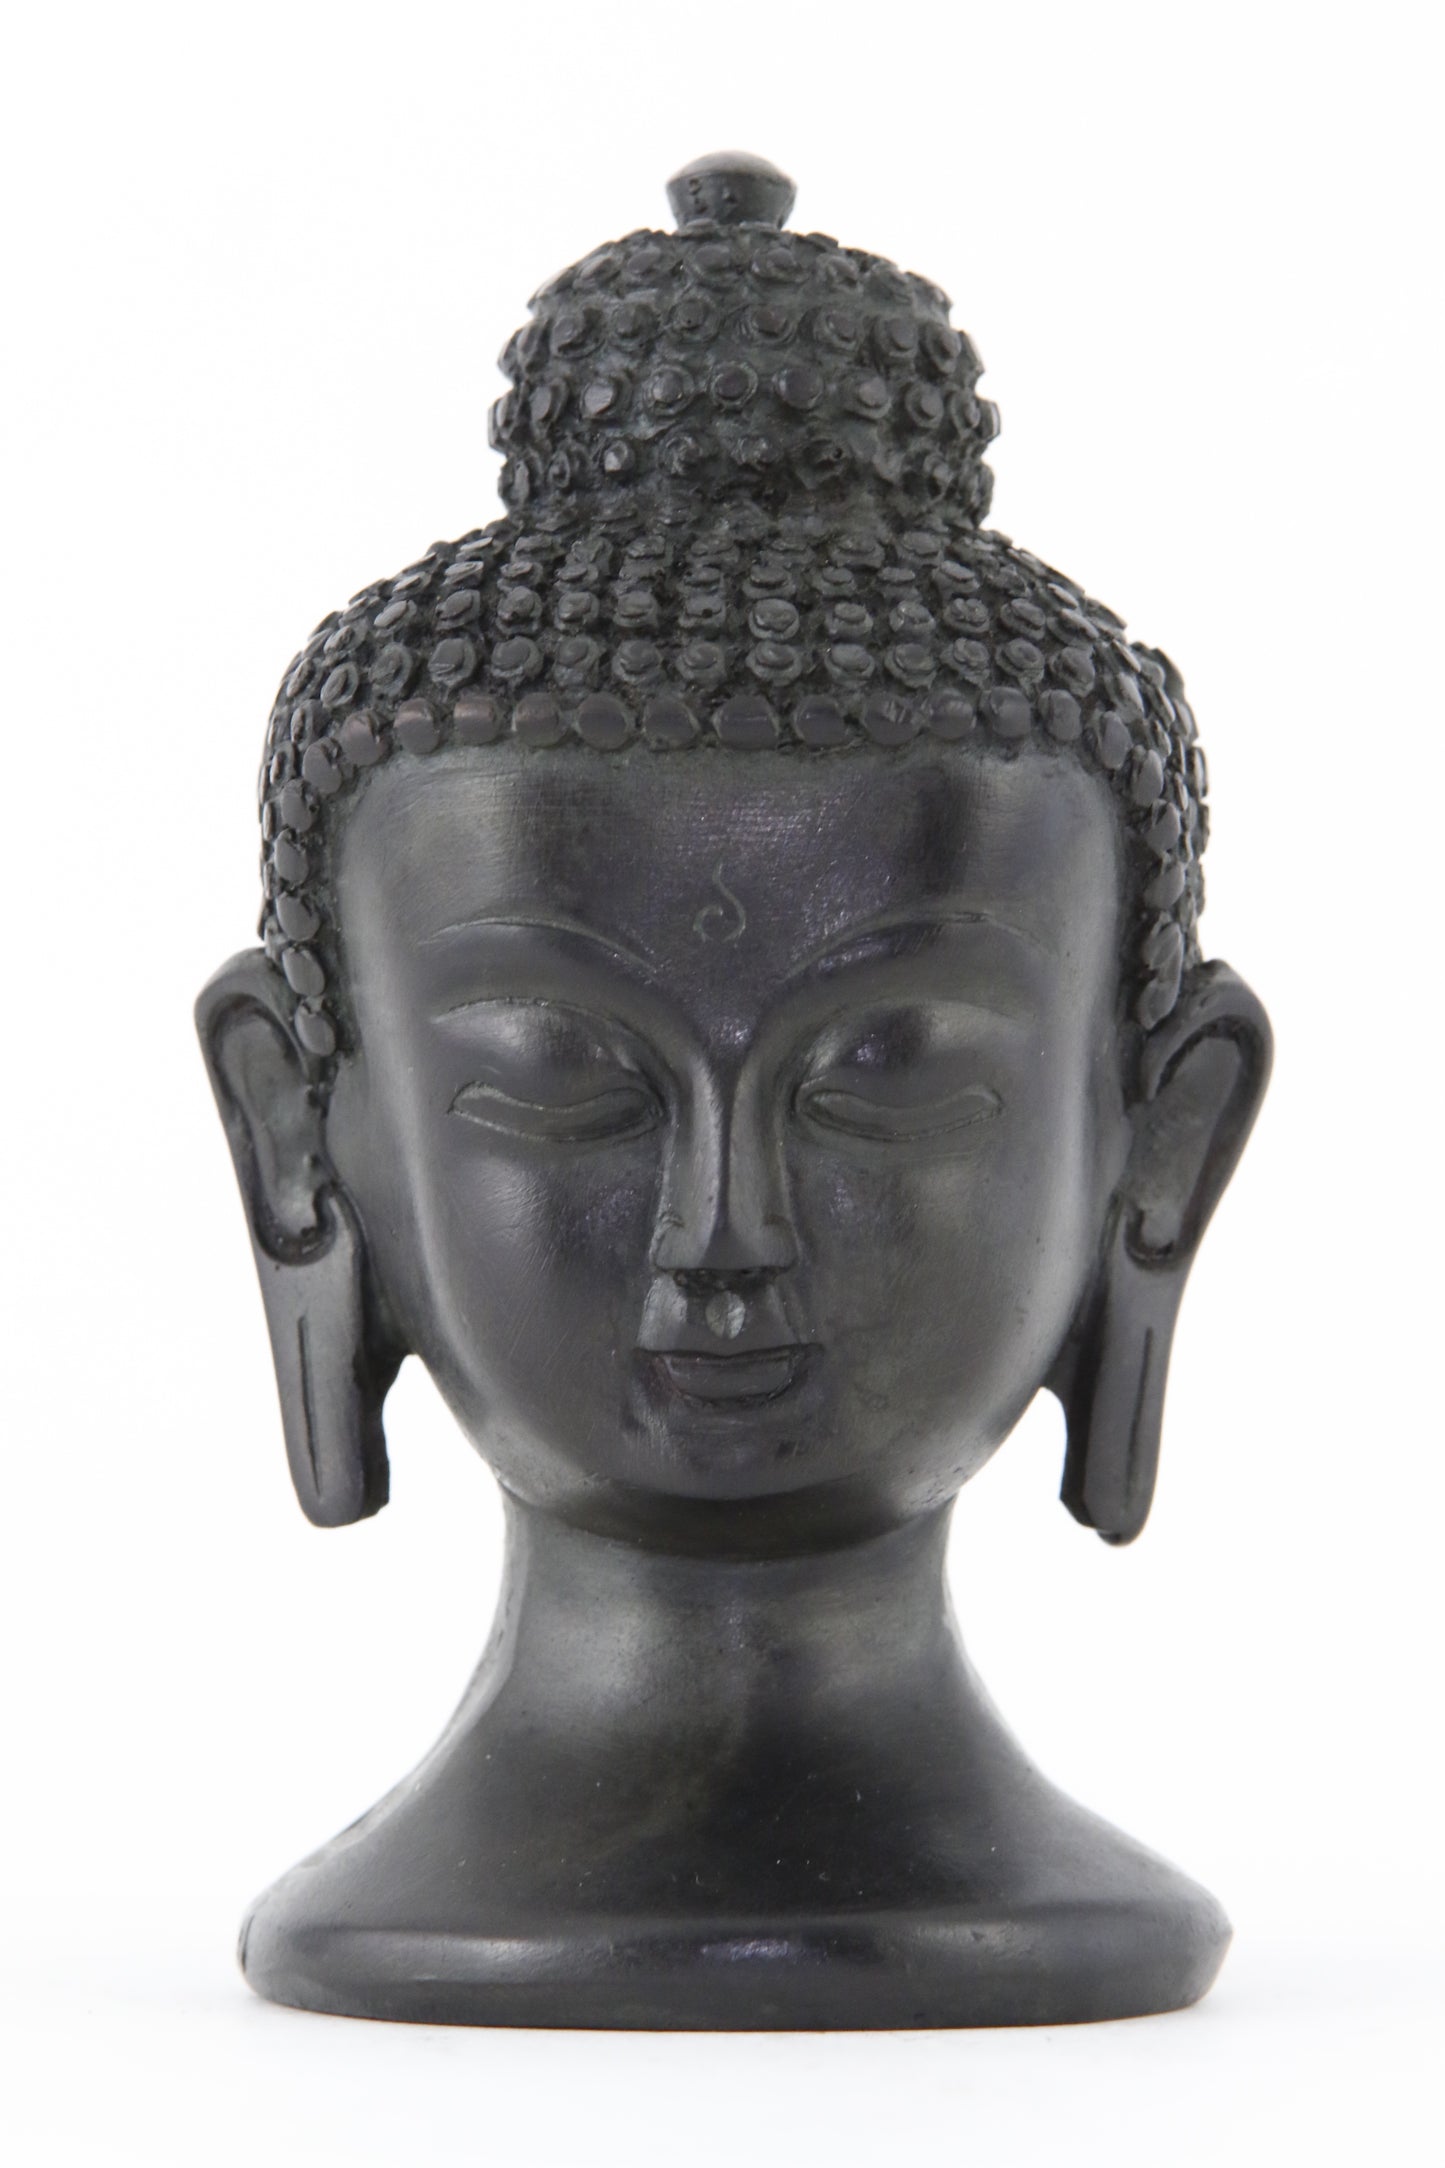 BUDDHA HEAD STATUE DARK SMALL FRONT VIEW